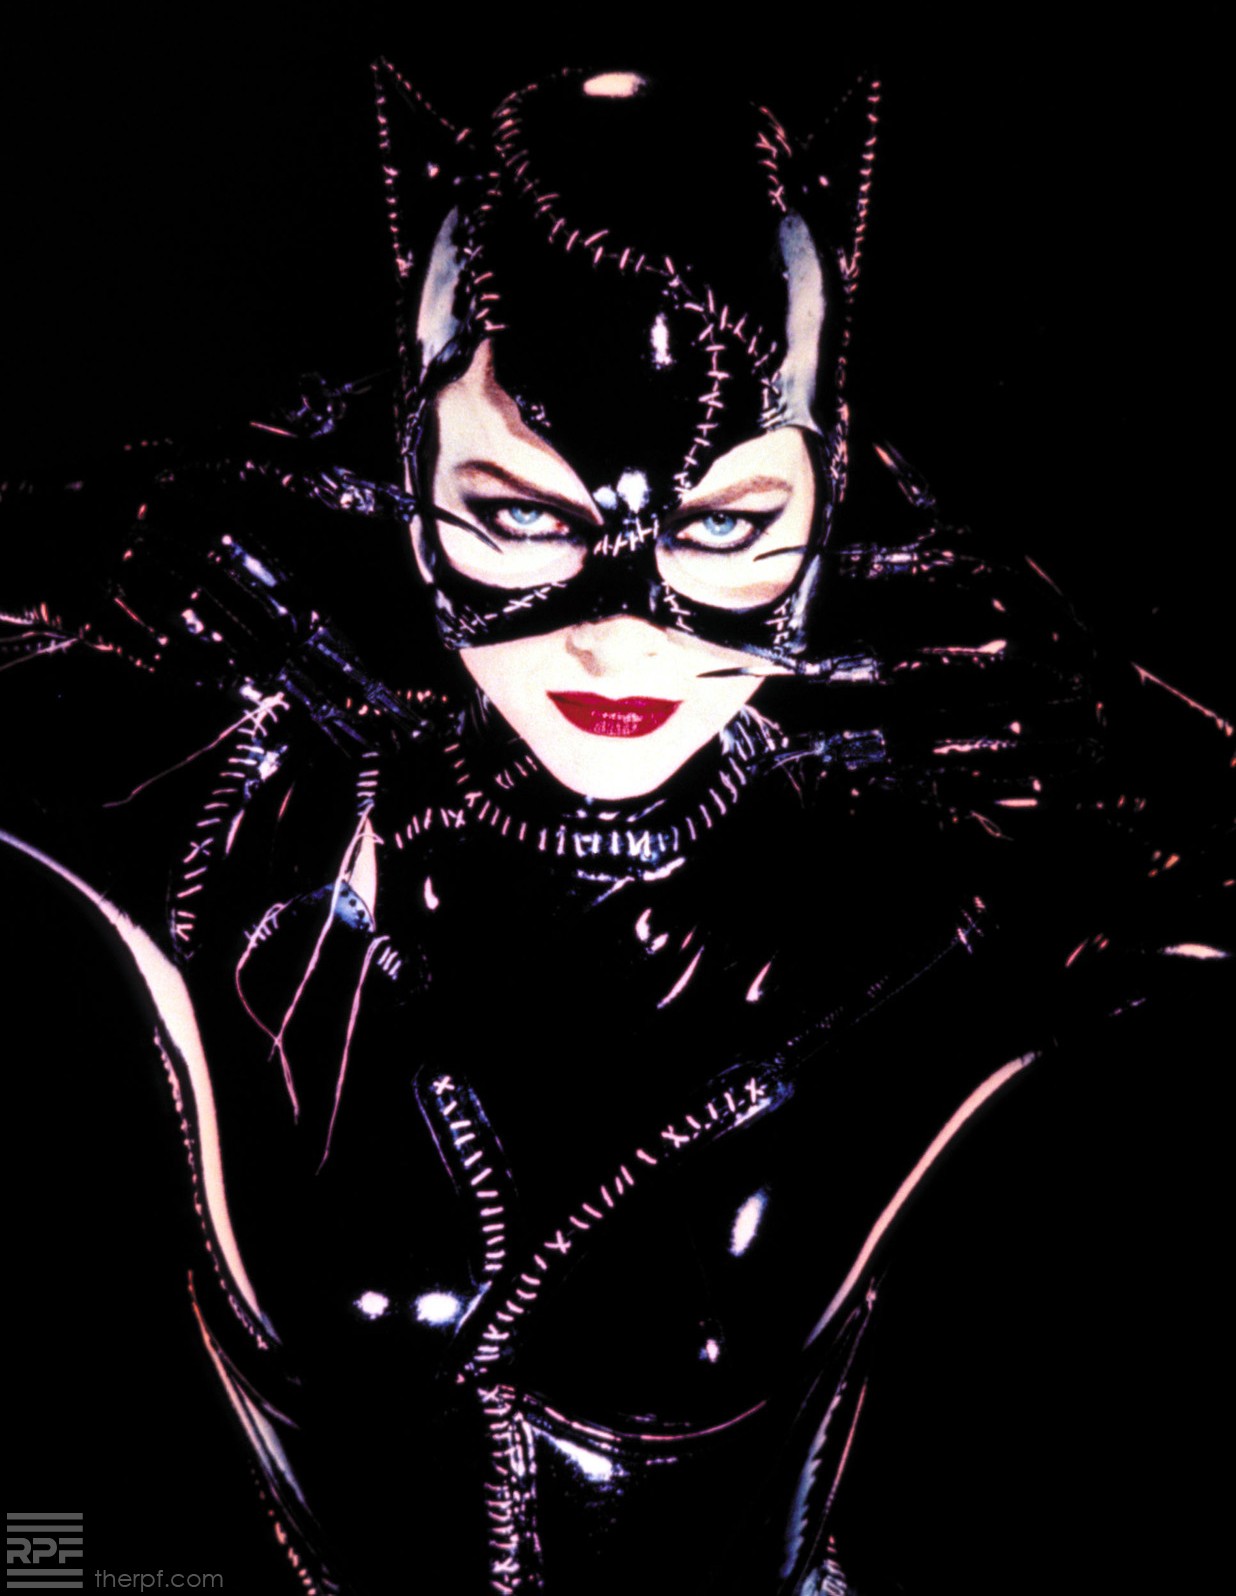 Catwoman (Batman returns)